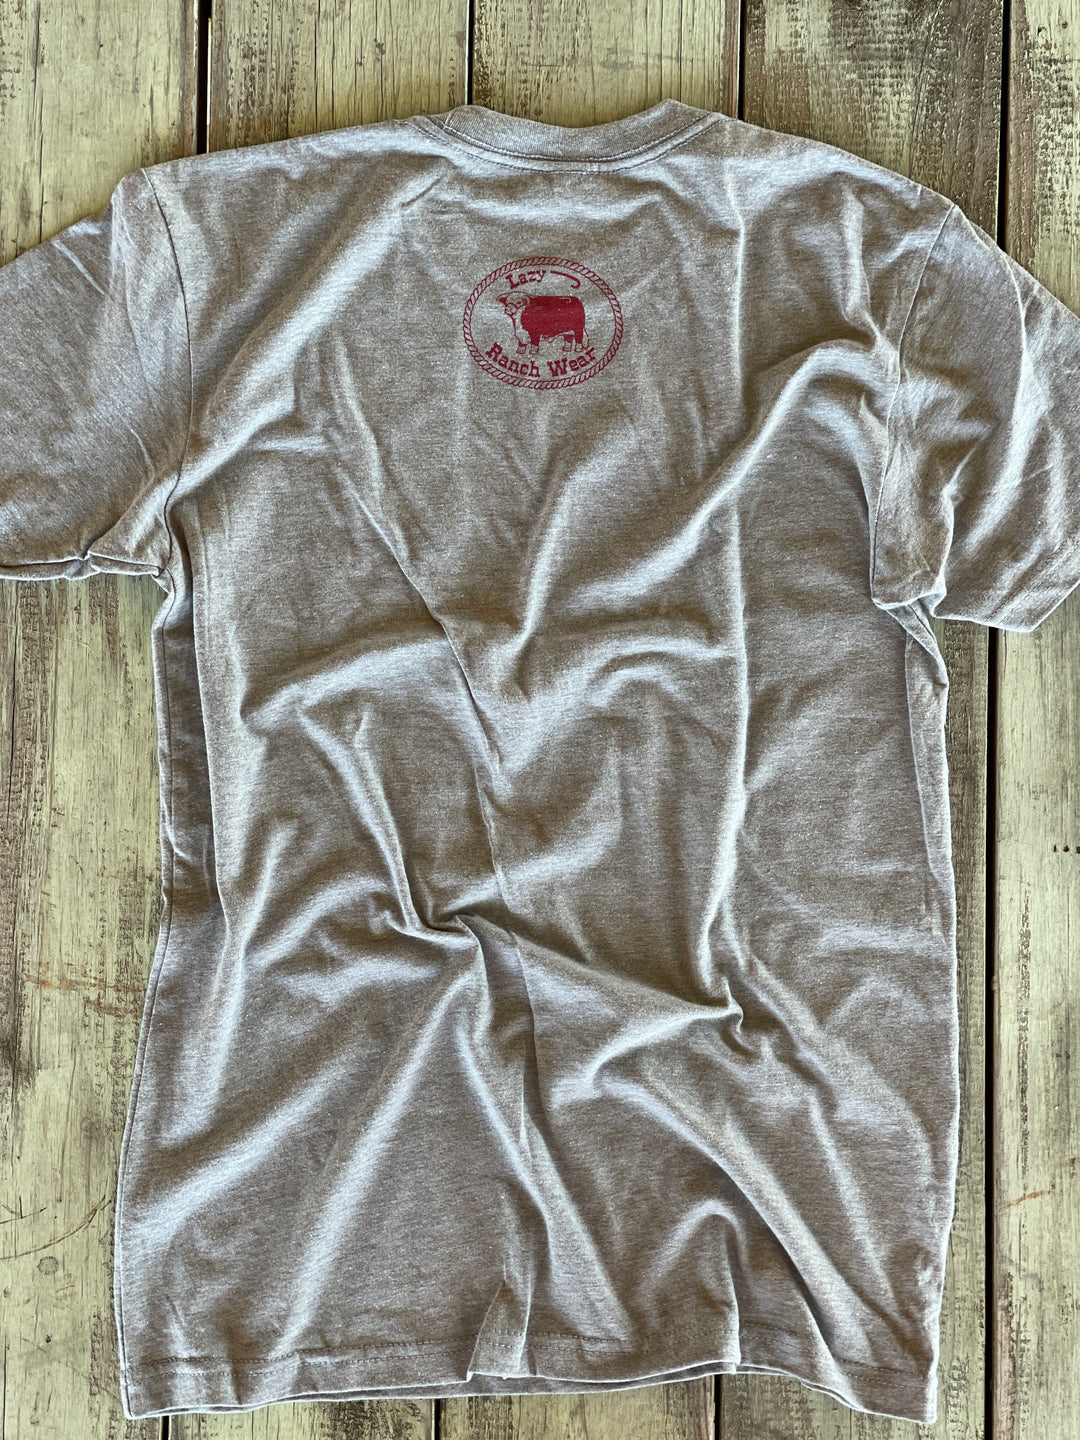 Lazy J Ranch Wear Santa Fe T-Shirt - LIght Grey